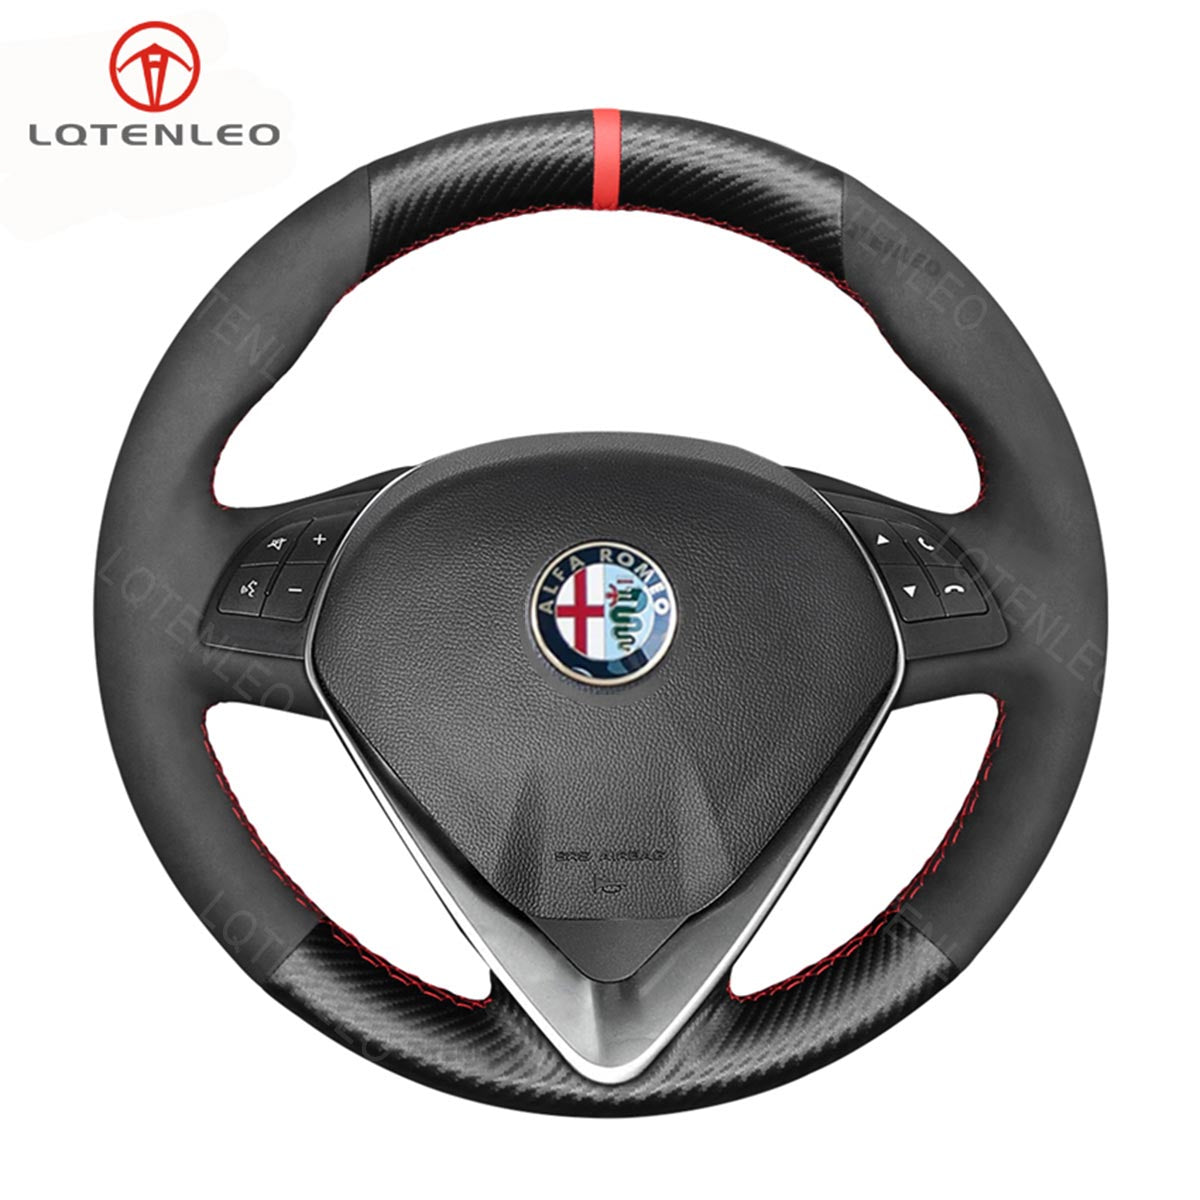 LQTENLEO Alcantara Carbon Fiber Suede Leather Hand-stitched Car Steering Wheel Cover for Alfa Romeo Giulietta 2014-2021(O Shape) - LQTENLEO Official Store